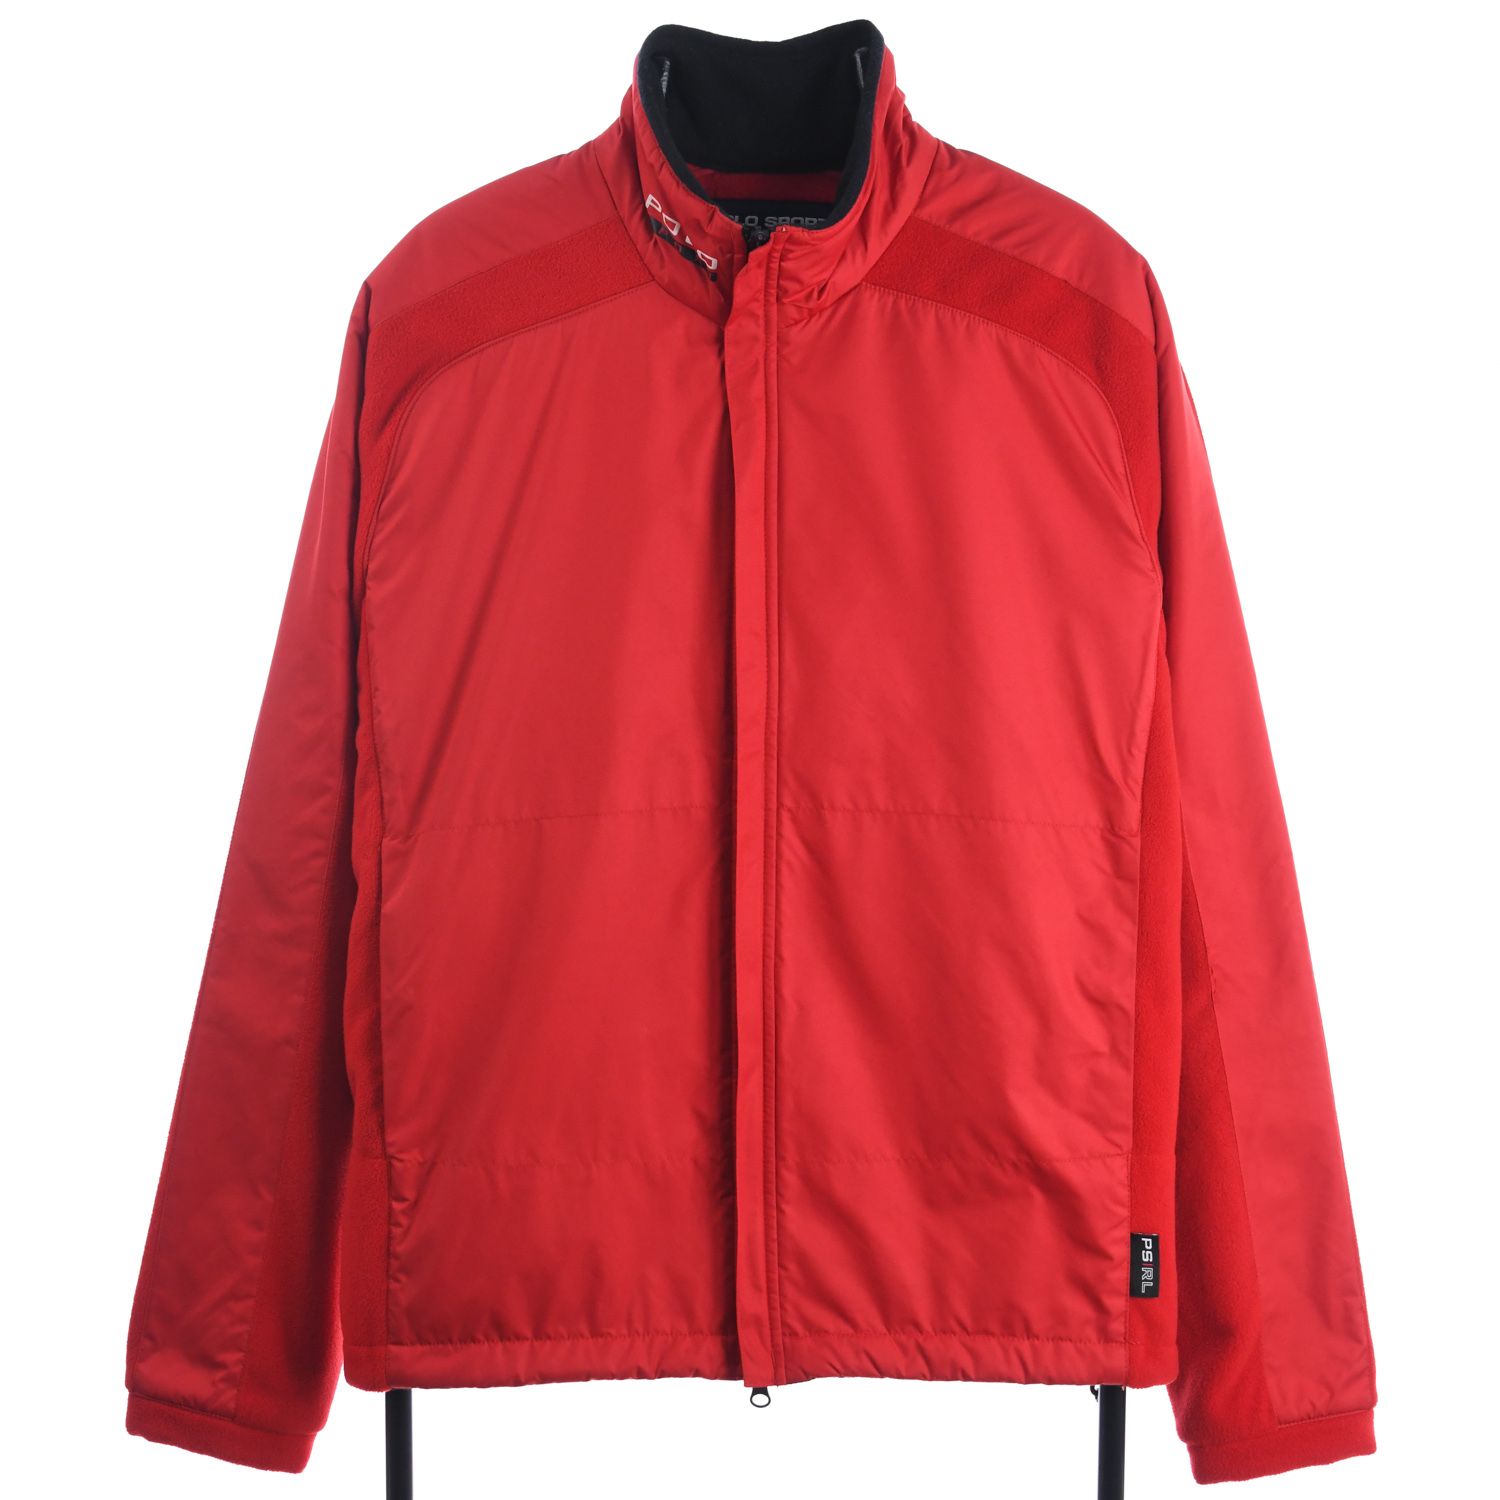 Ralph Lauren Polo Sport Red Fleece With  Light Shell Panelling